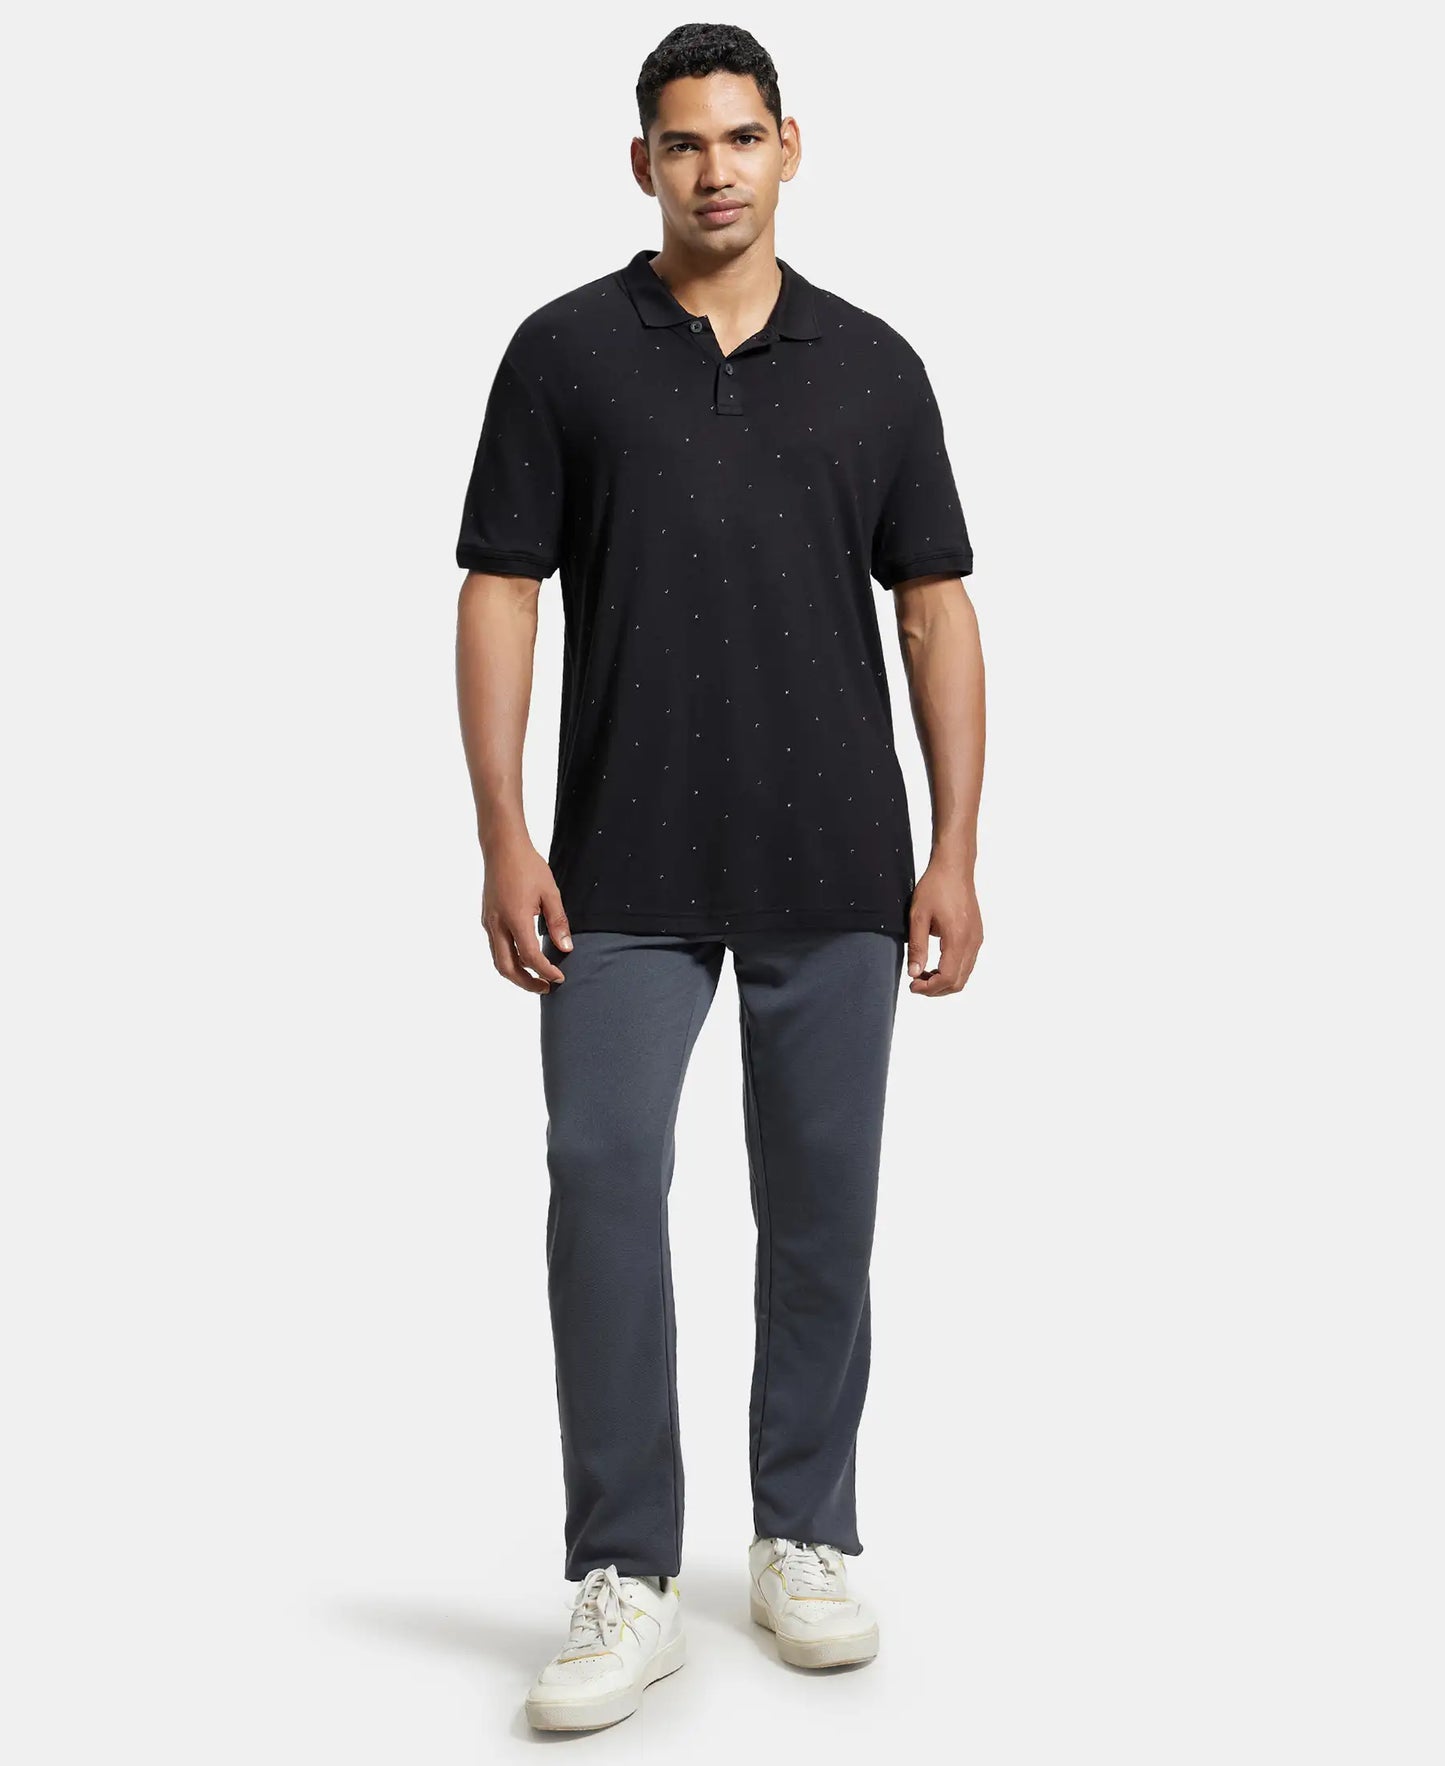 Tencel Micro Modal and Cotton Blend Printed Half Sleeve Polo T-Shirt - Black-4